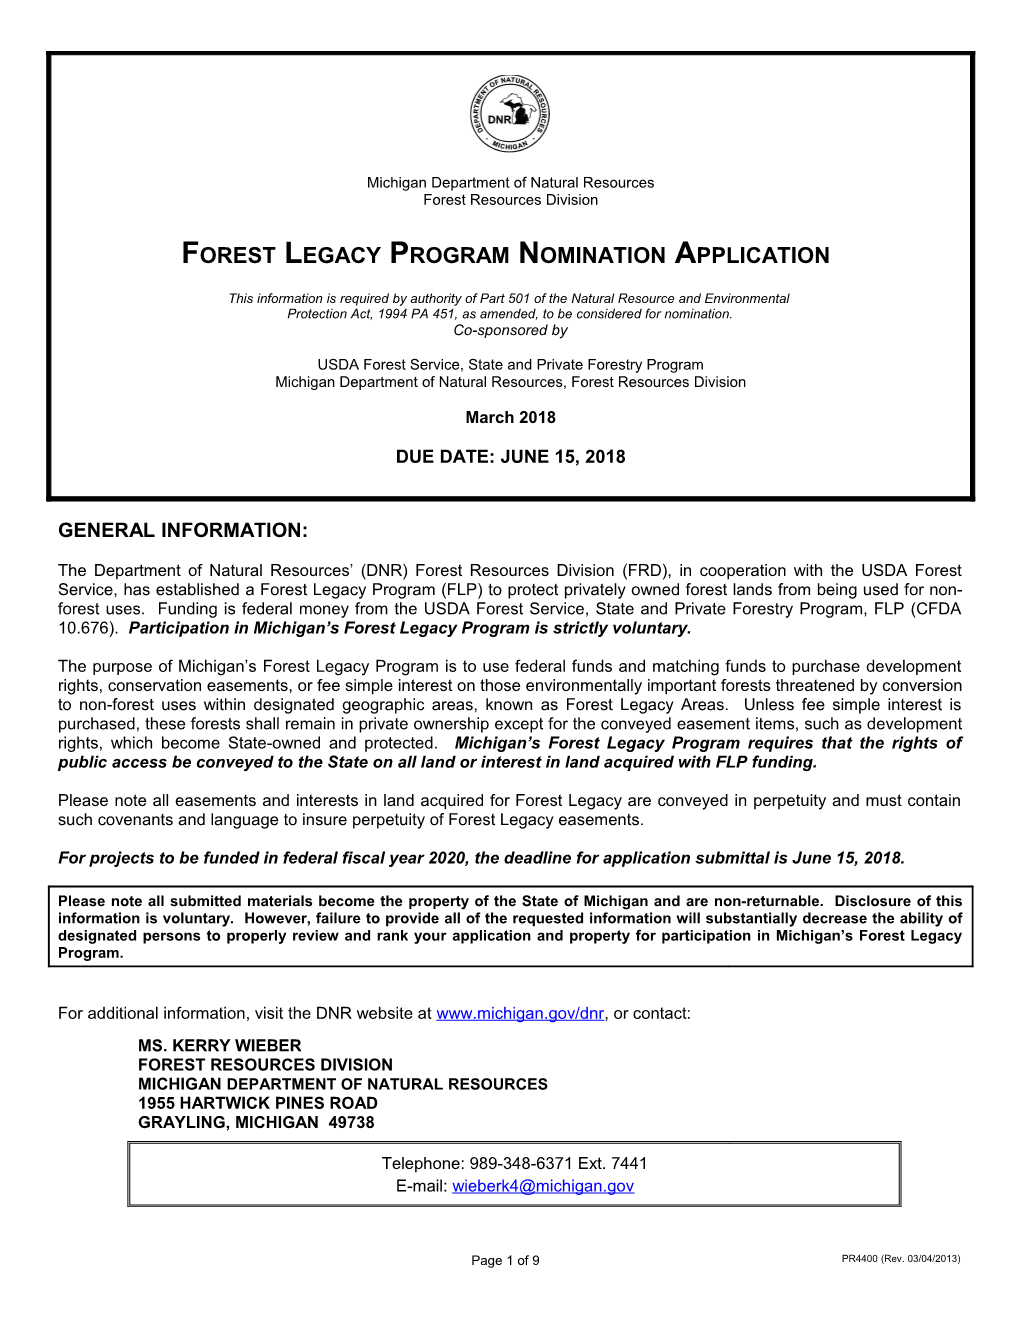 Forest Legacy Program Nomination Application